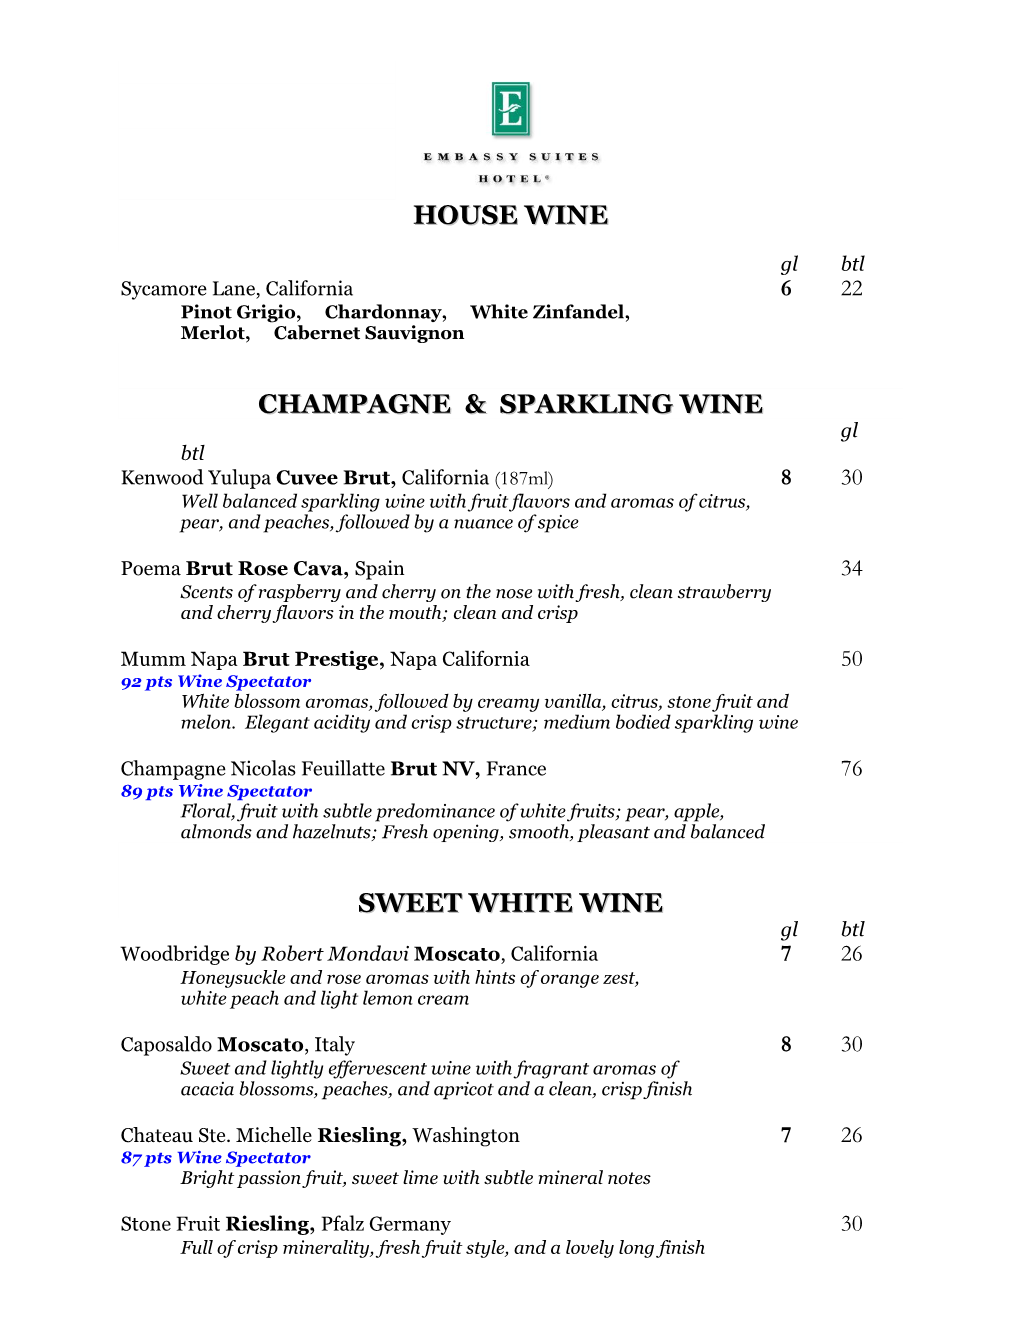 House Wine Champagne & Sparkling Wine Sweet White Wine